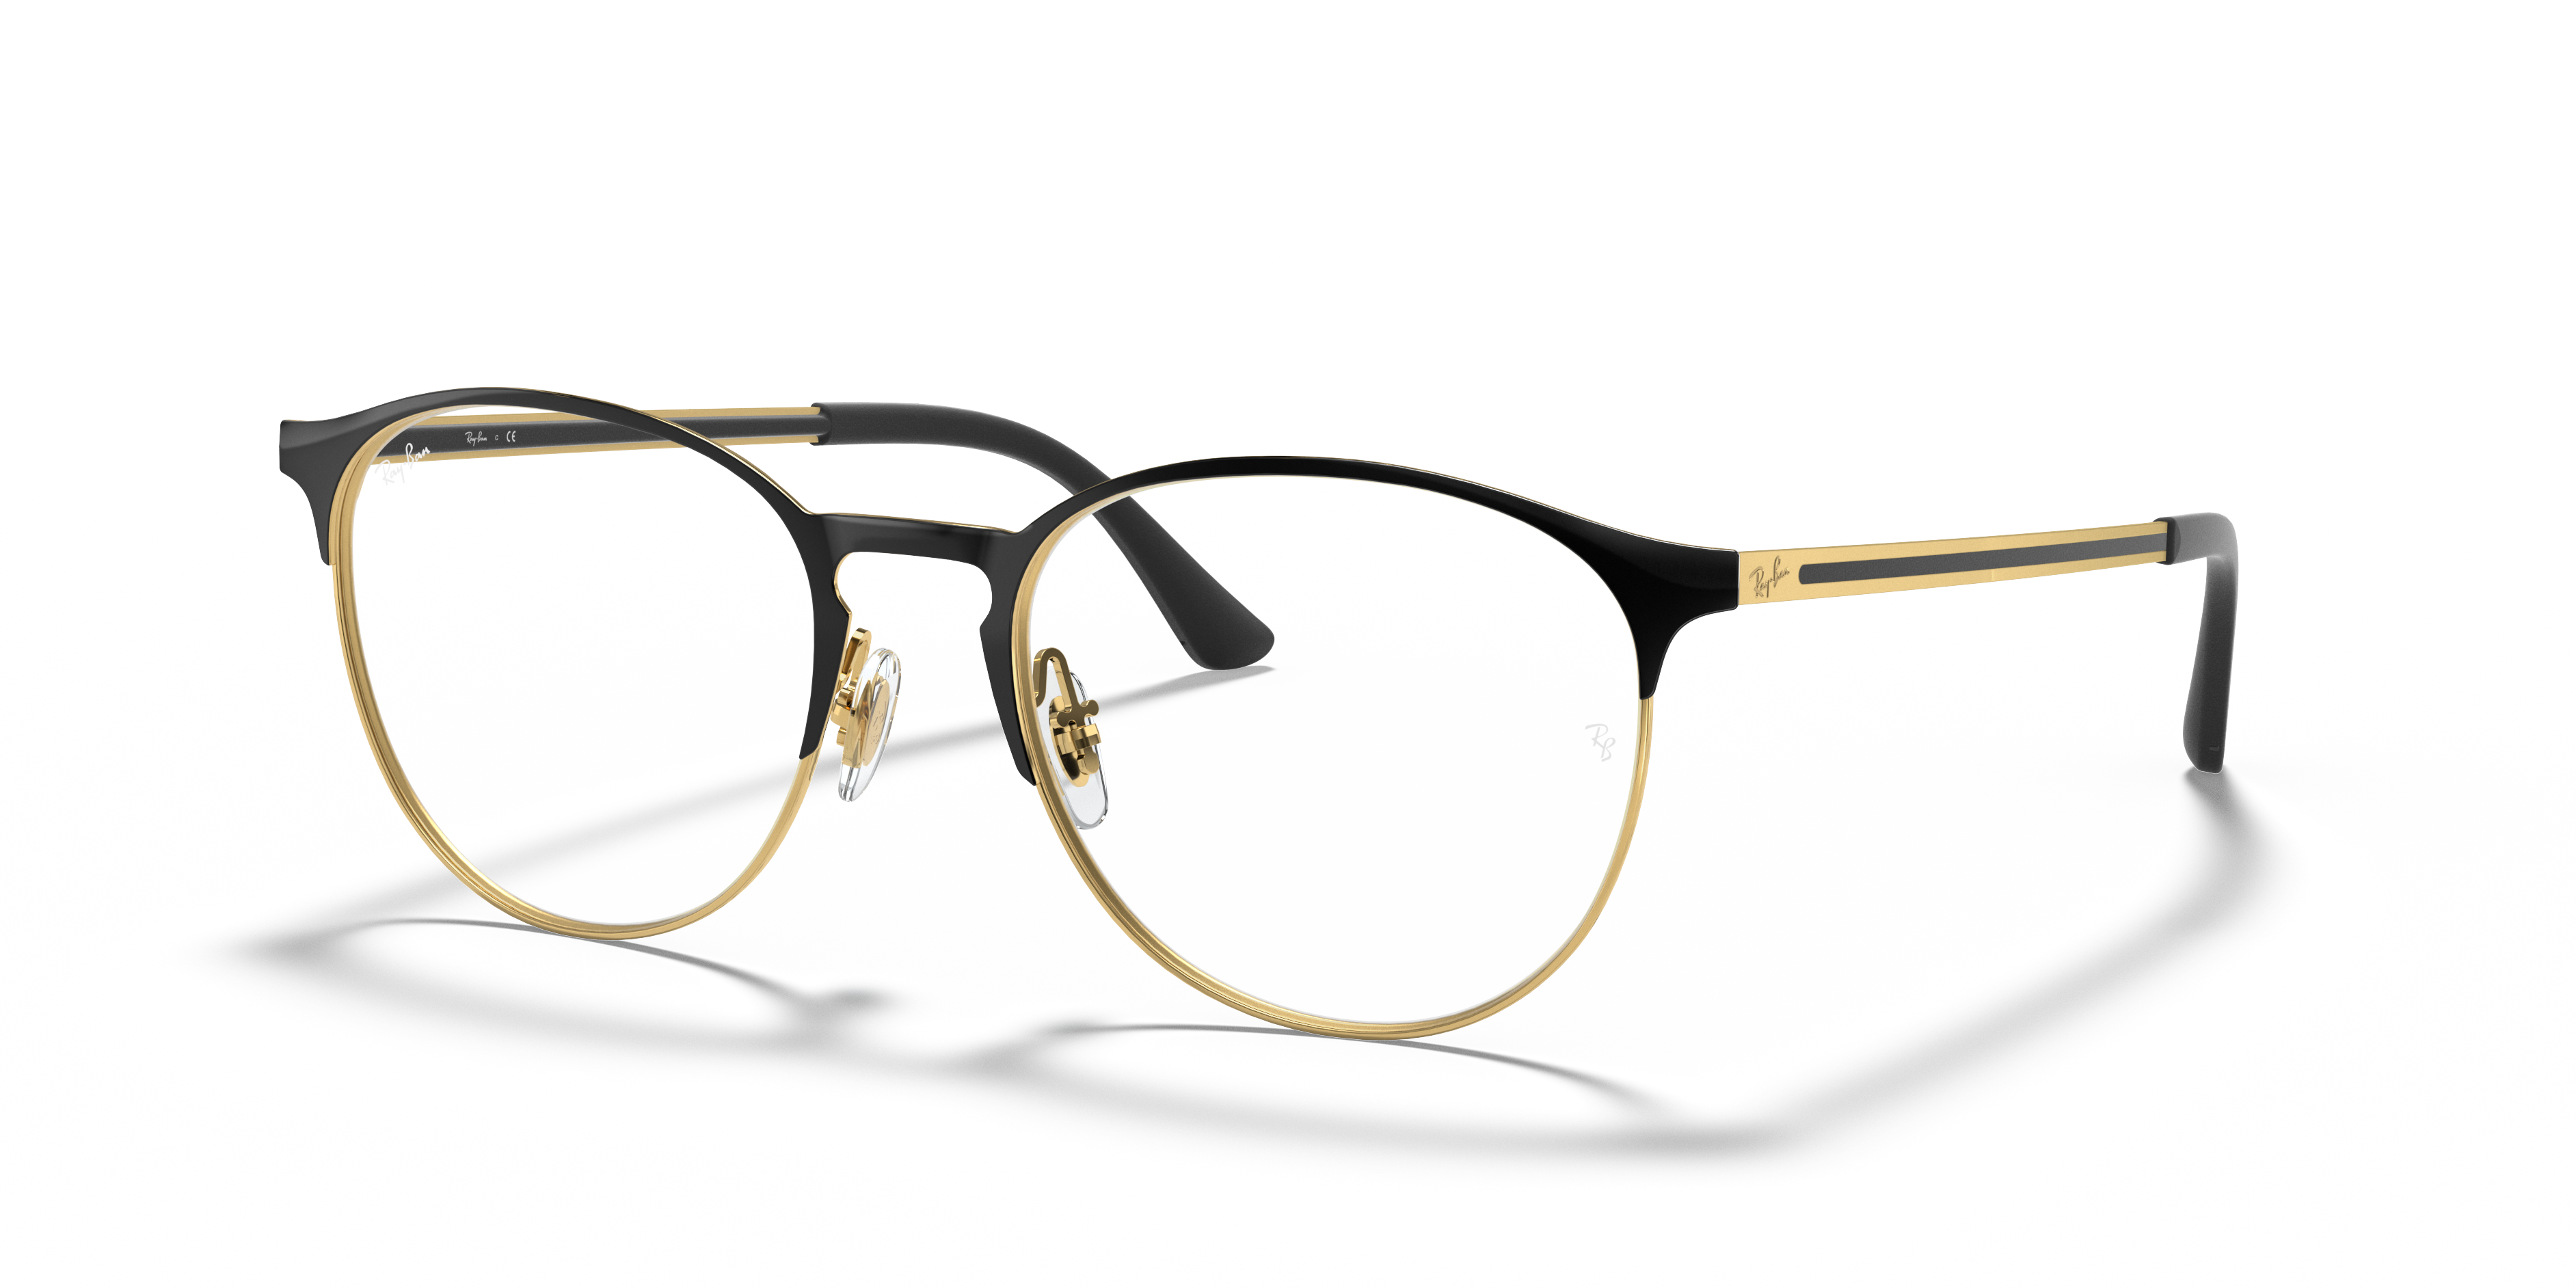 Rb6375 Optics Eyeglasses with Black On Gold Frame | Ray-Ban®